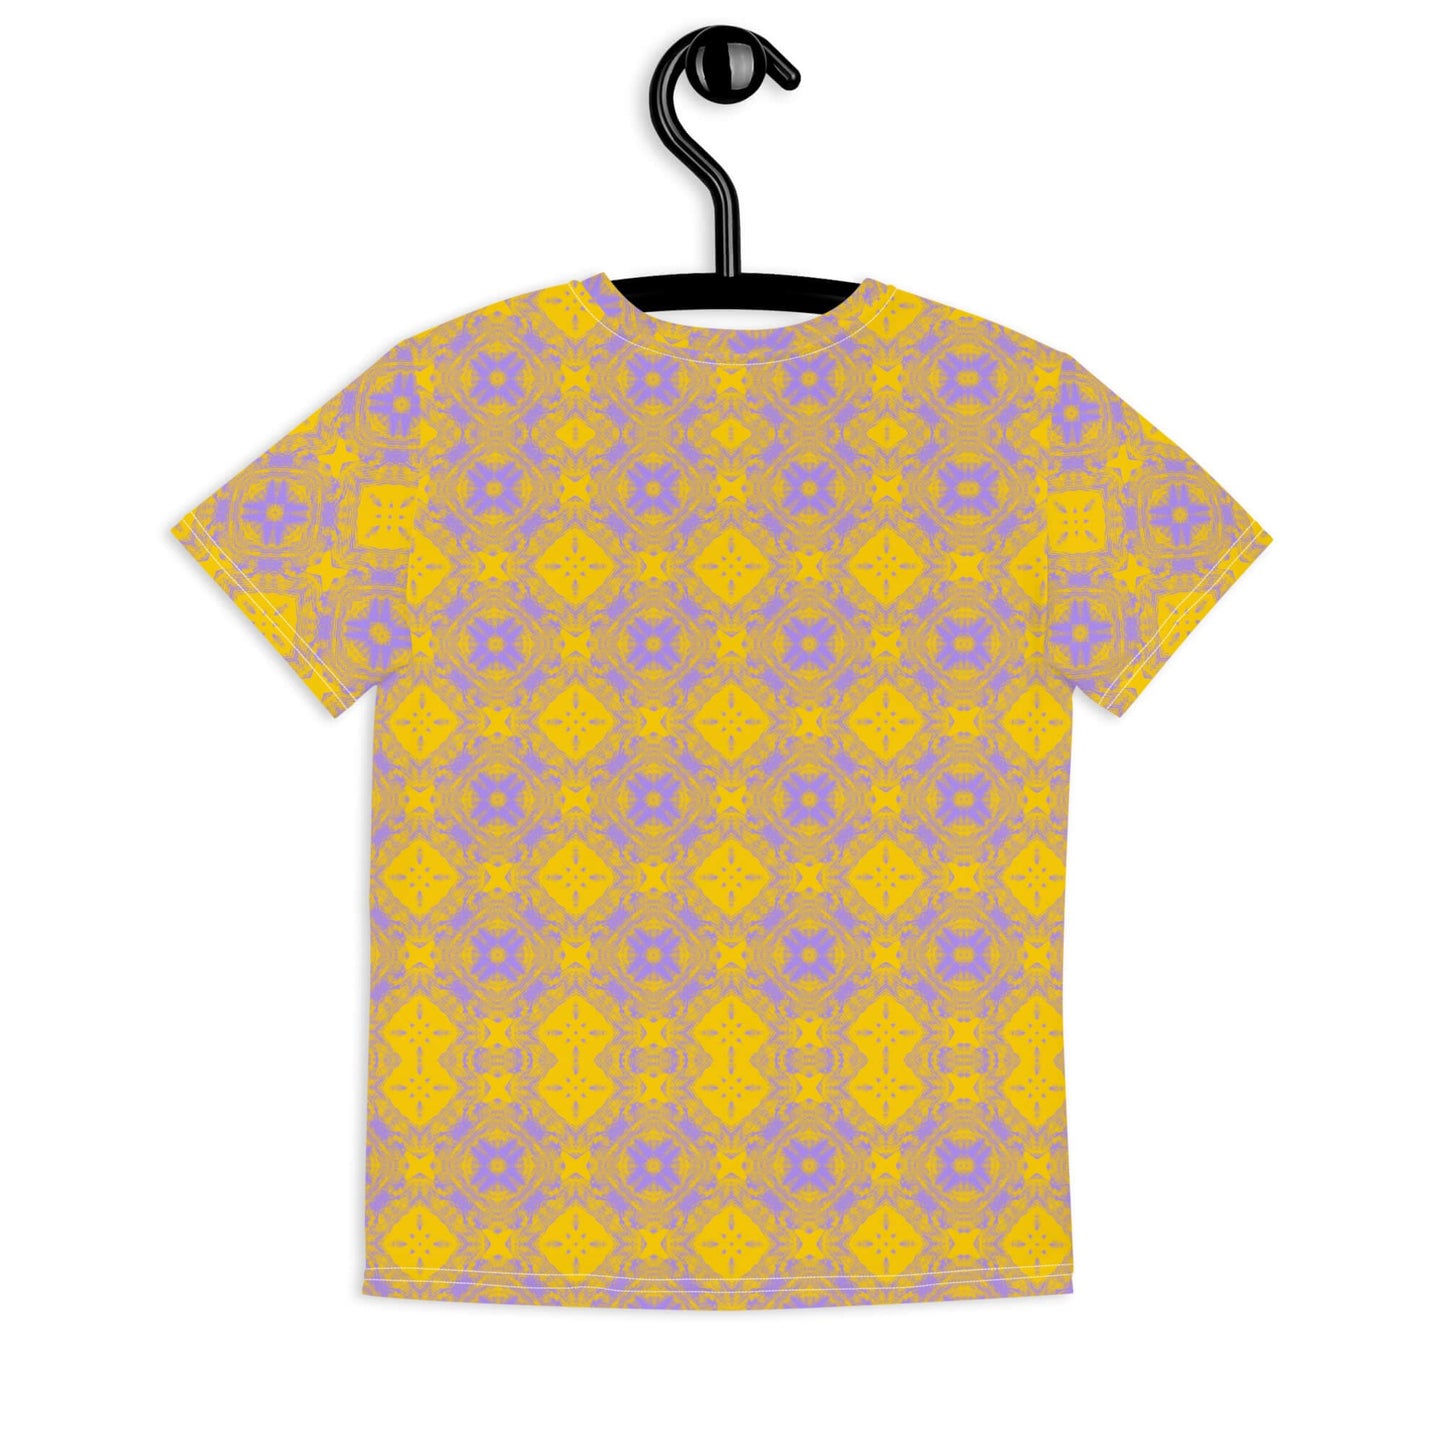 oneowlartist-t-shirt-design